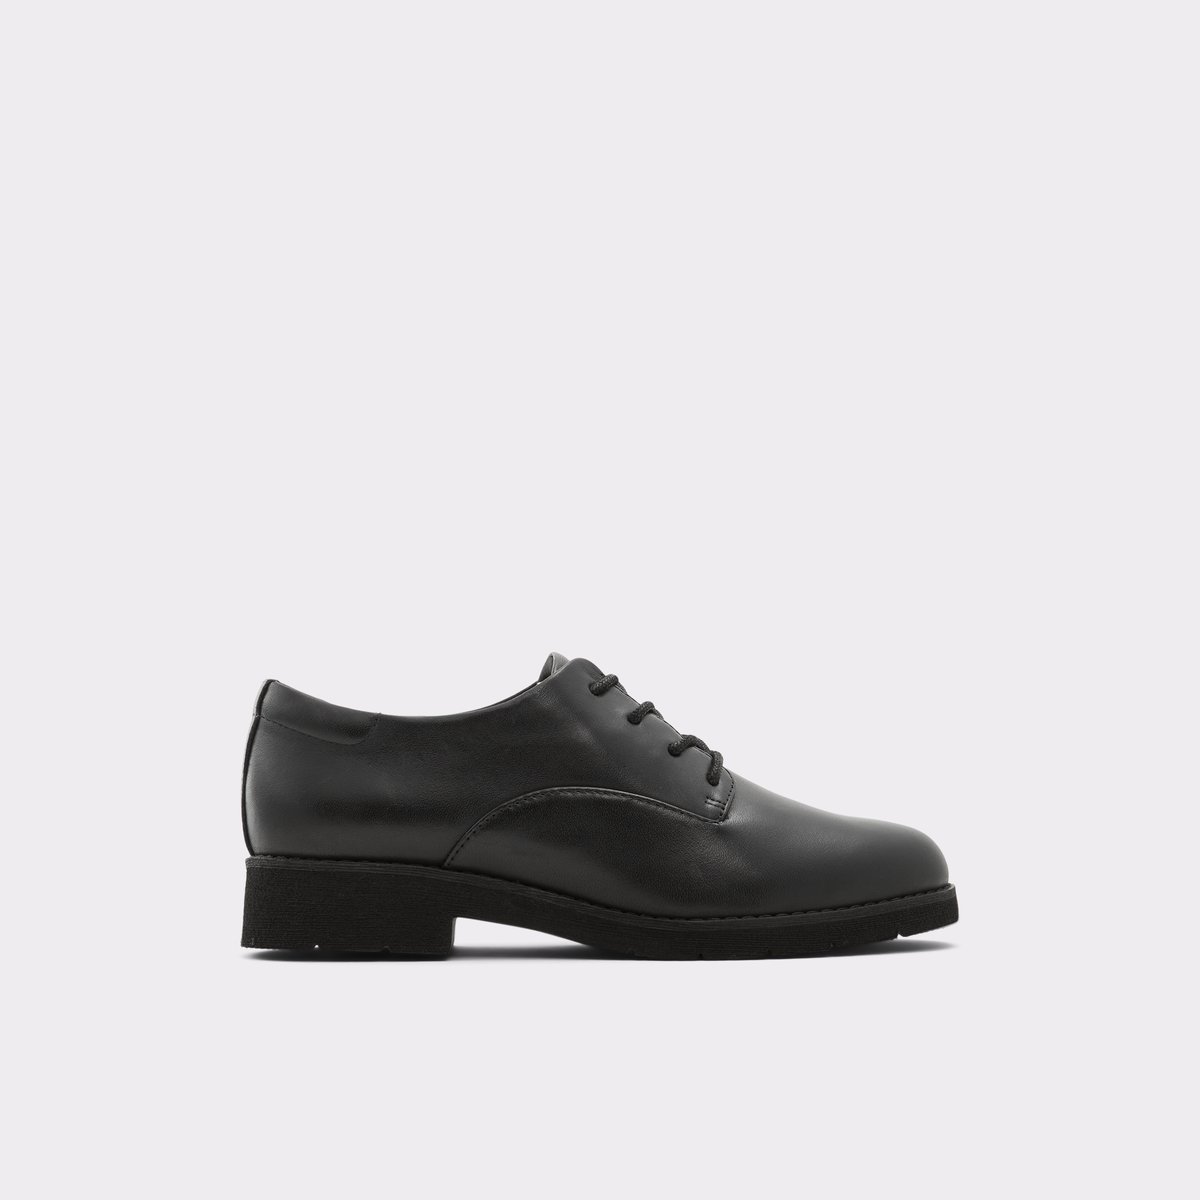 Cerquedaflex Black Leather Smooth Women's Loafers & Oxfords | ALDO Canada